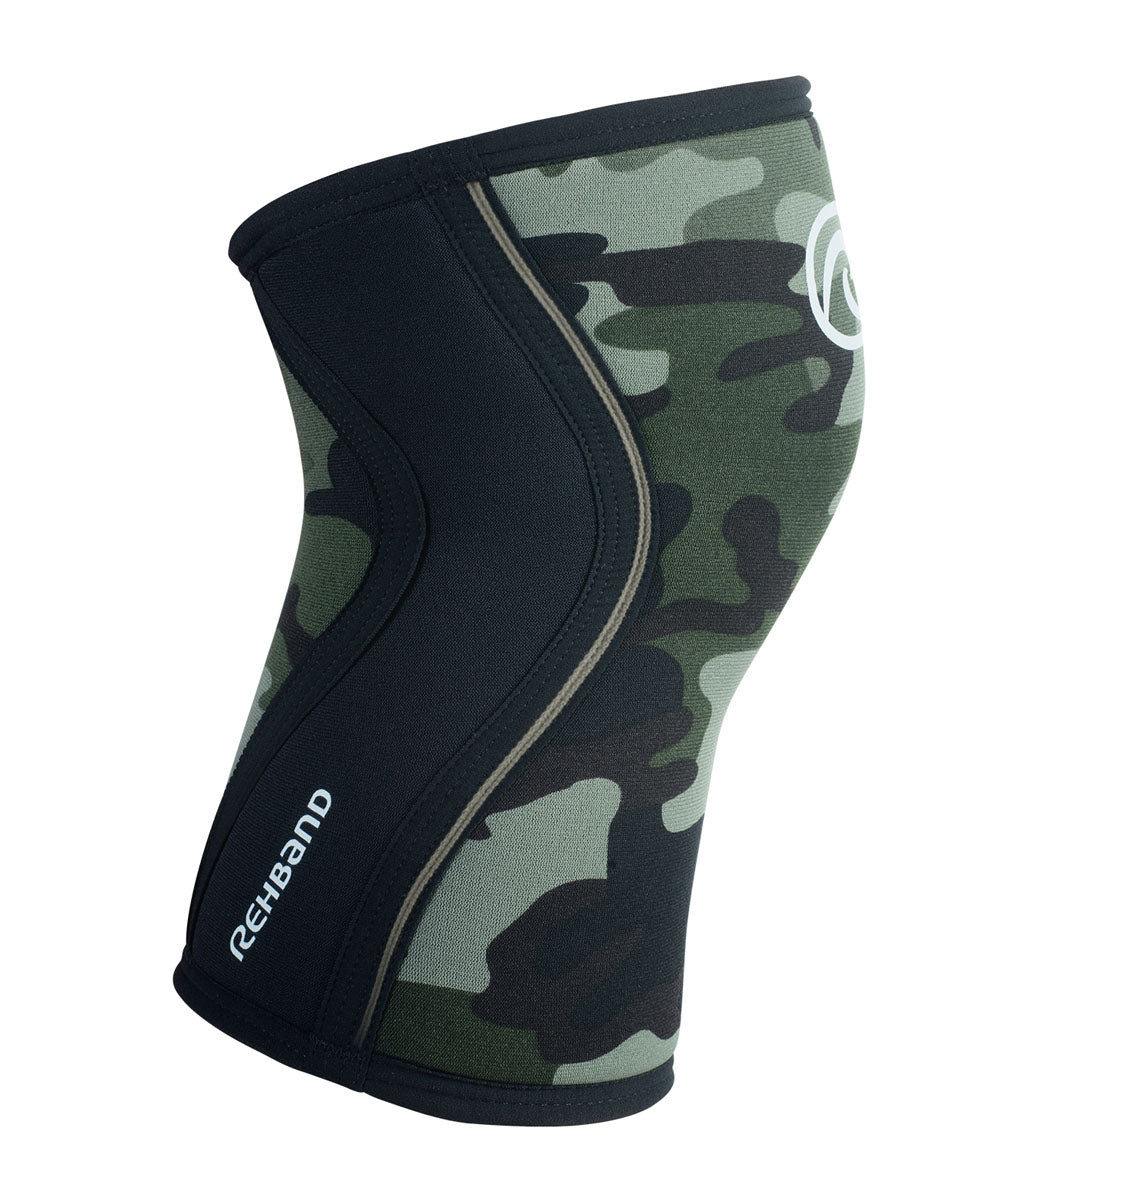 0775 - Rehband Rx Knee Sleeve - Camo - 5mm - Side